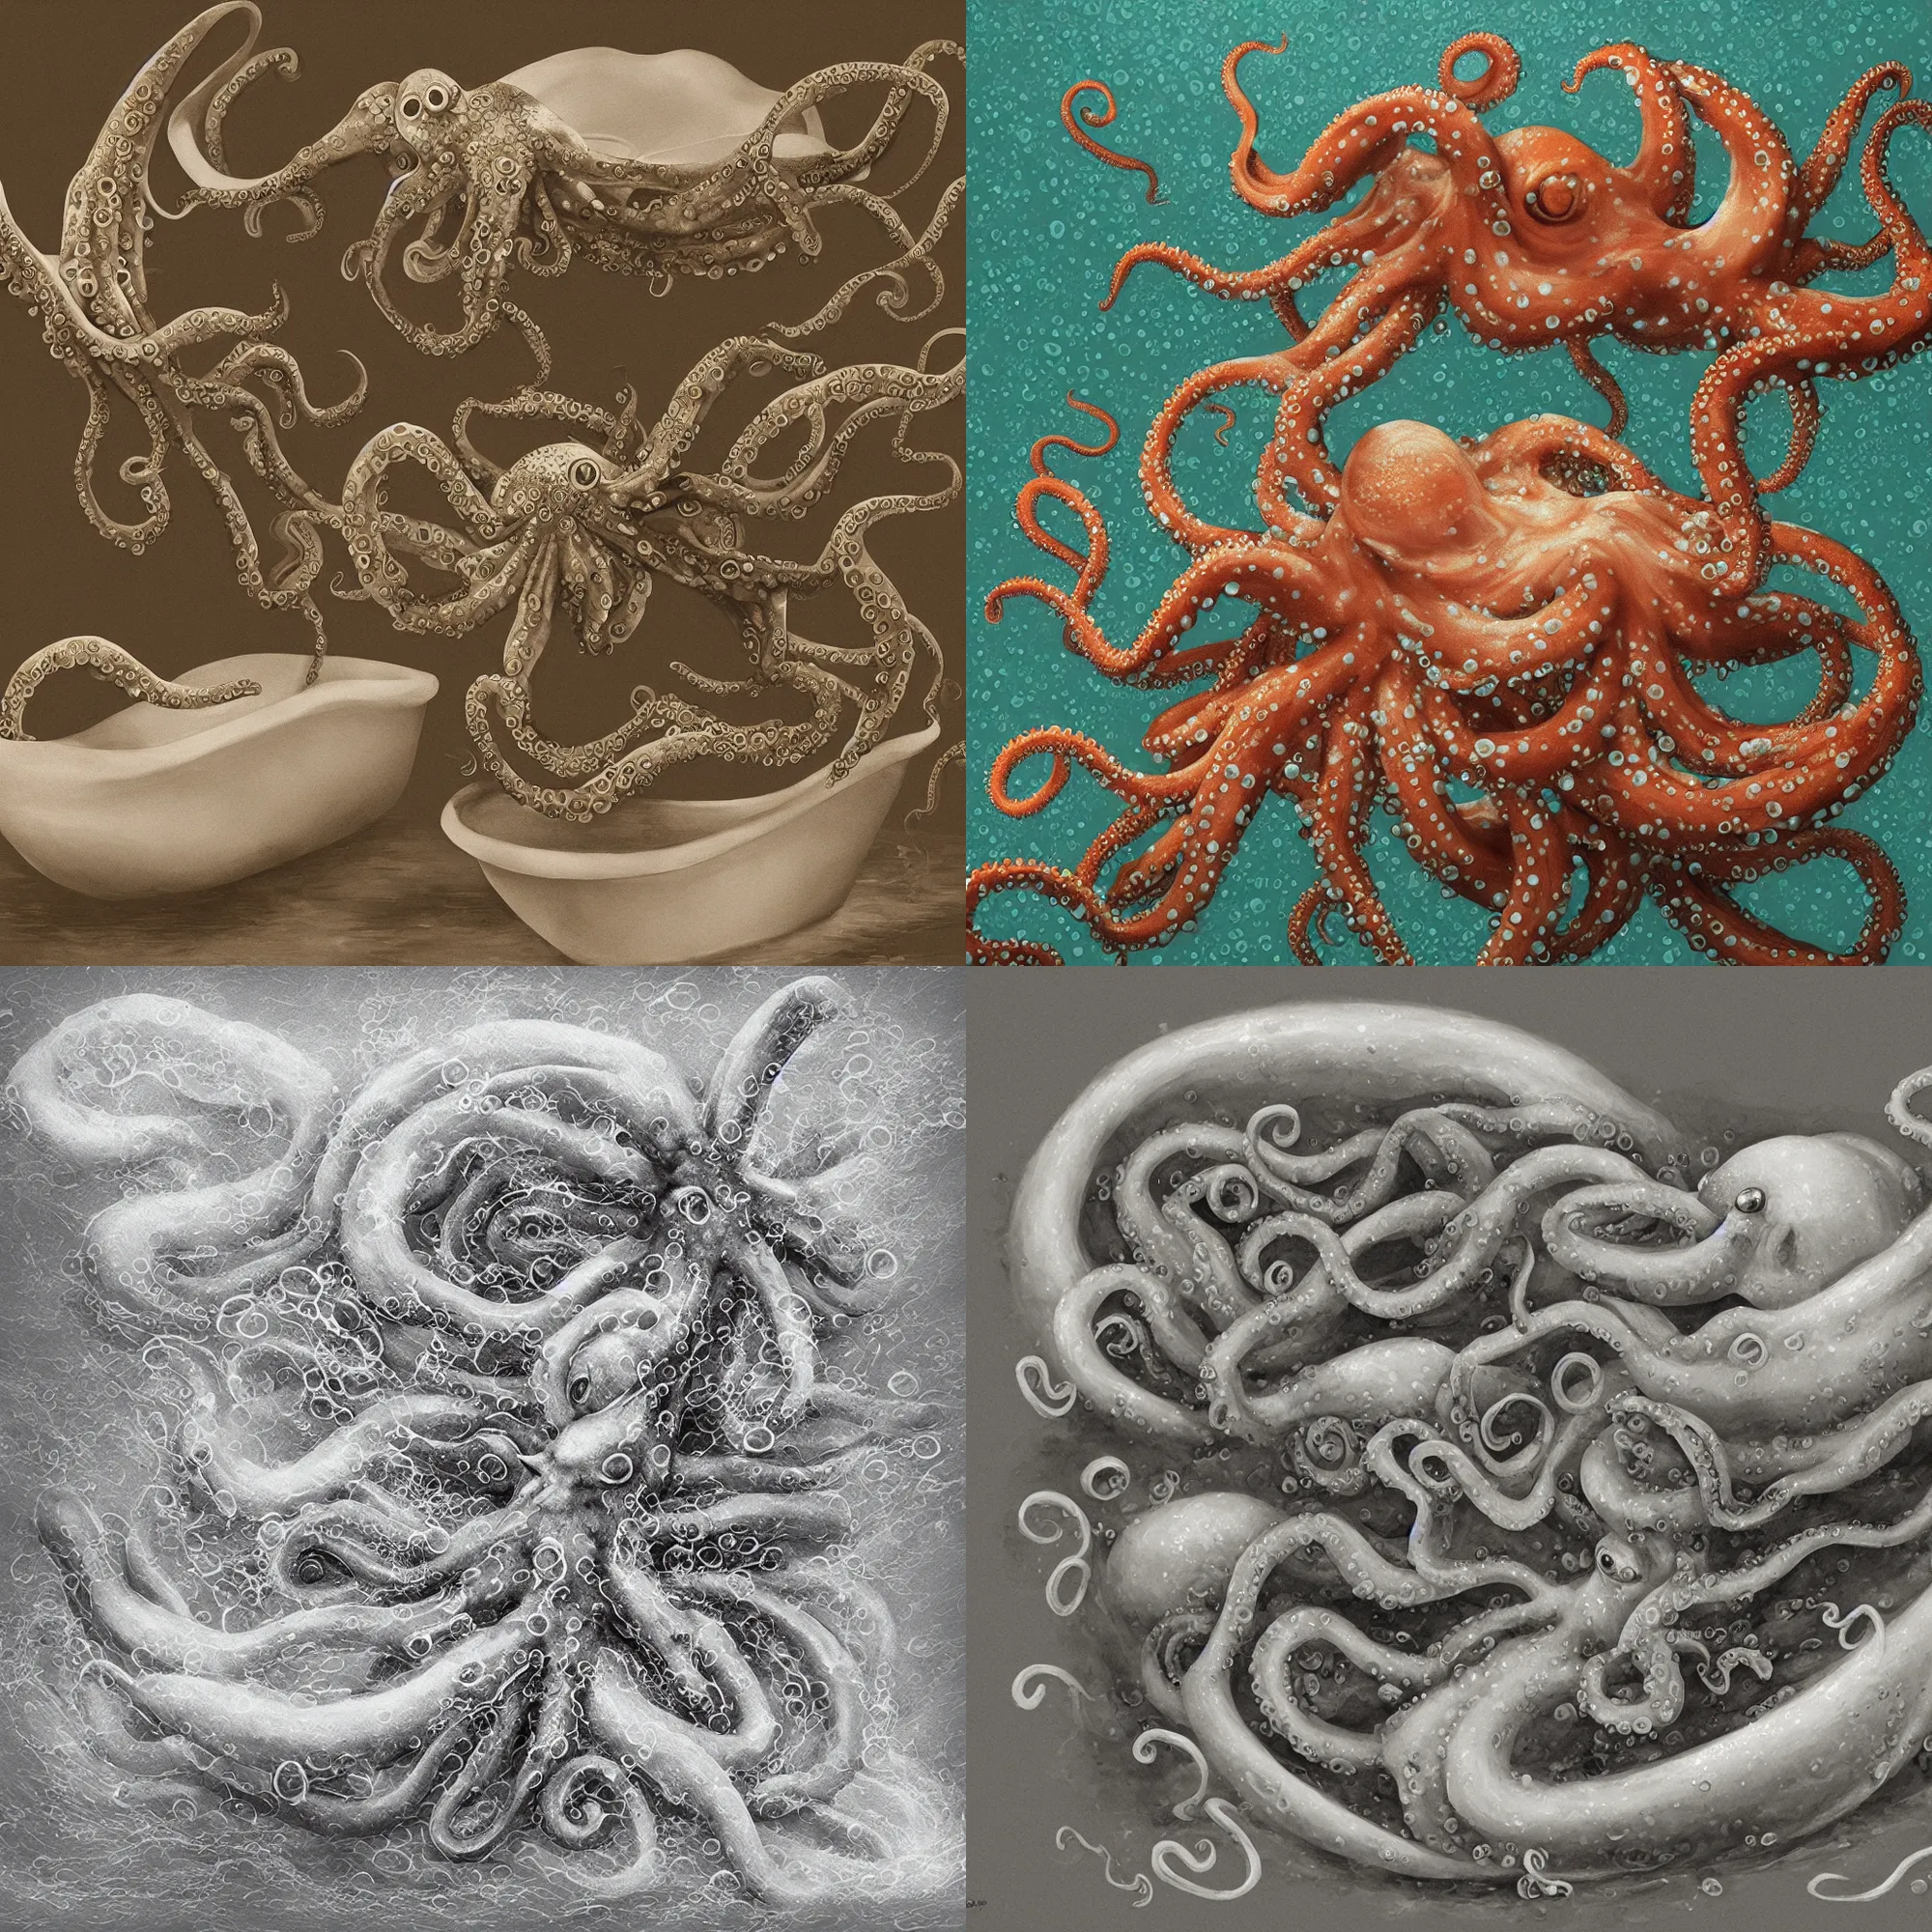 Prompt: A photo of octopus in a foamy bathtub, detailed, digital art